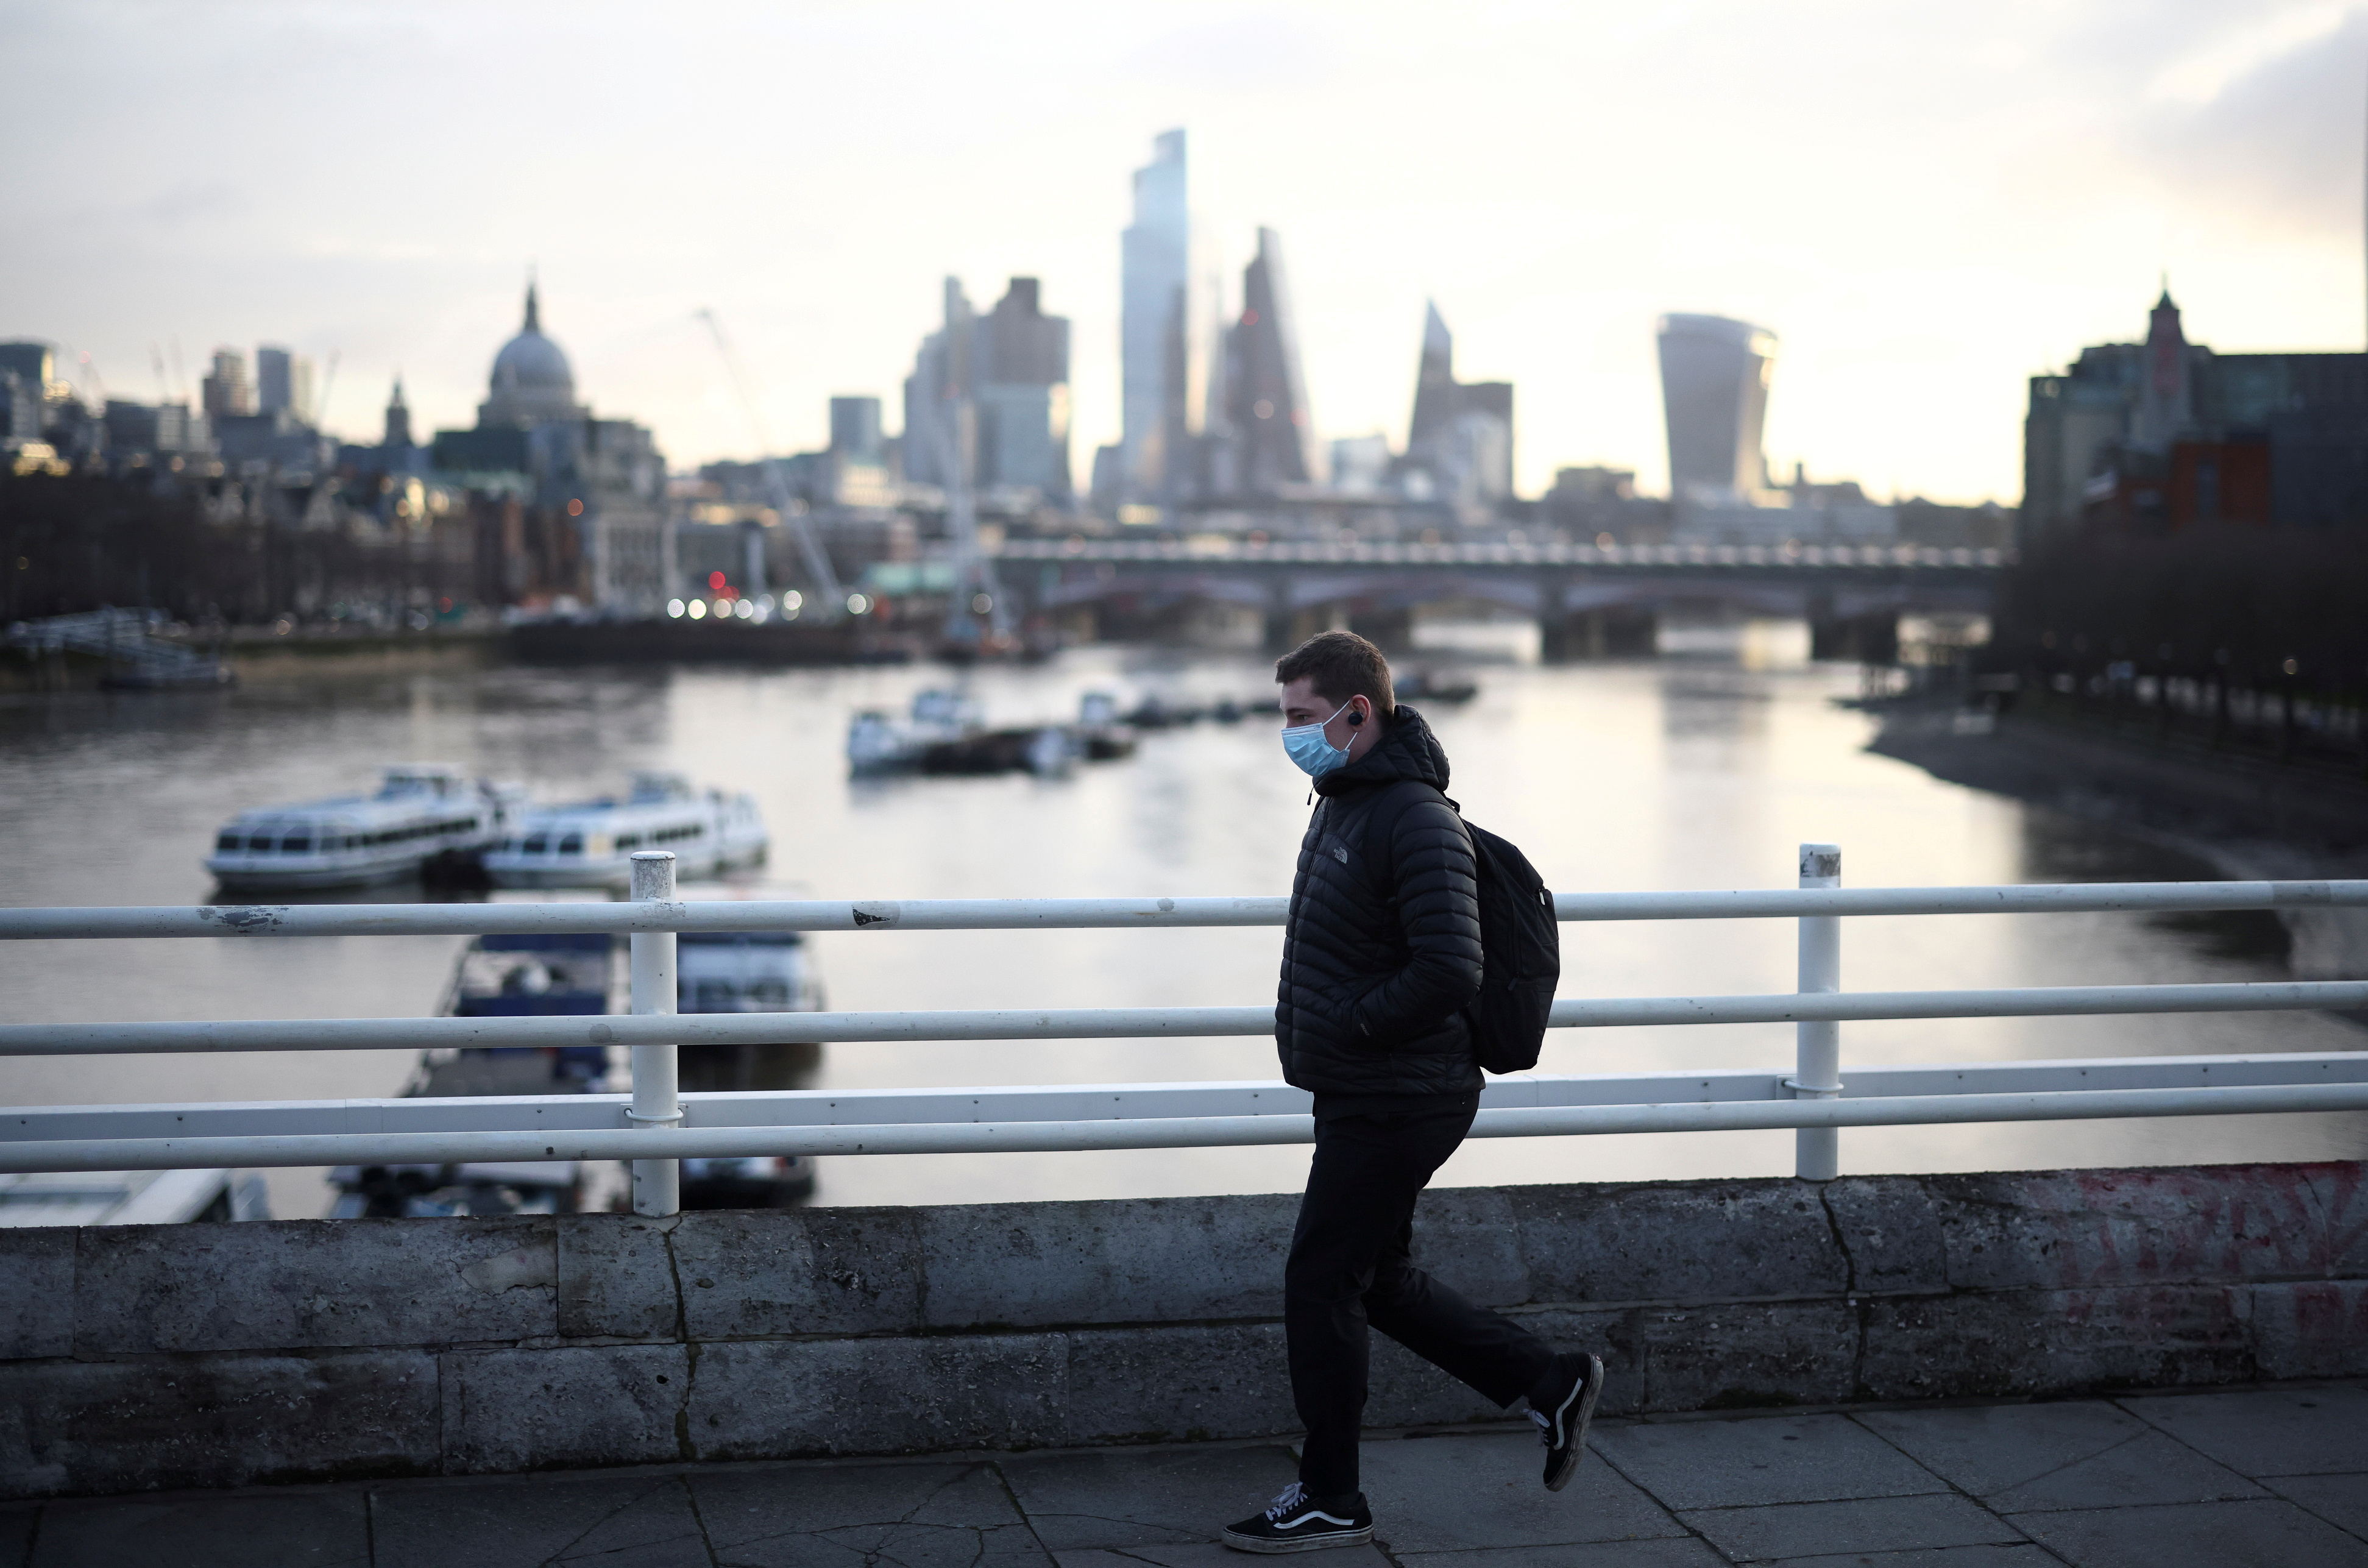 A man wearing a protective face mask walks across Waterloo Bridge, amid the coronavirus disease (COVID-19) outbreak in London, Britain